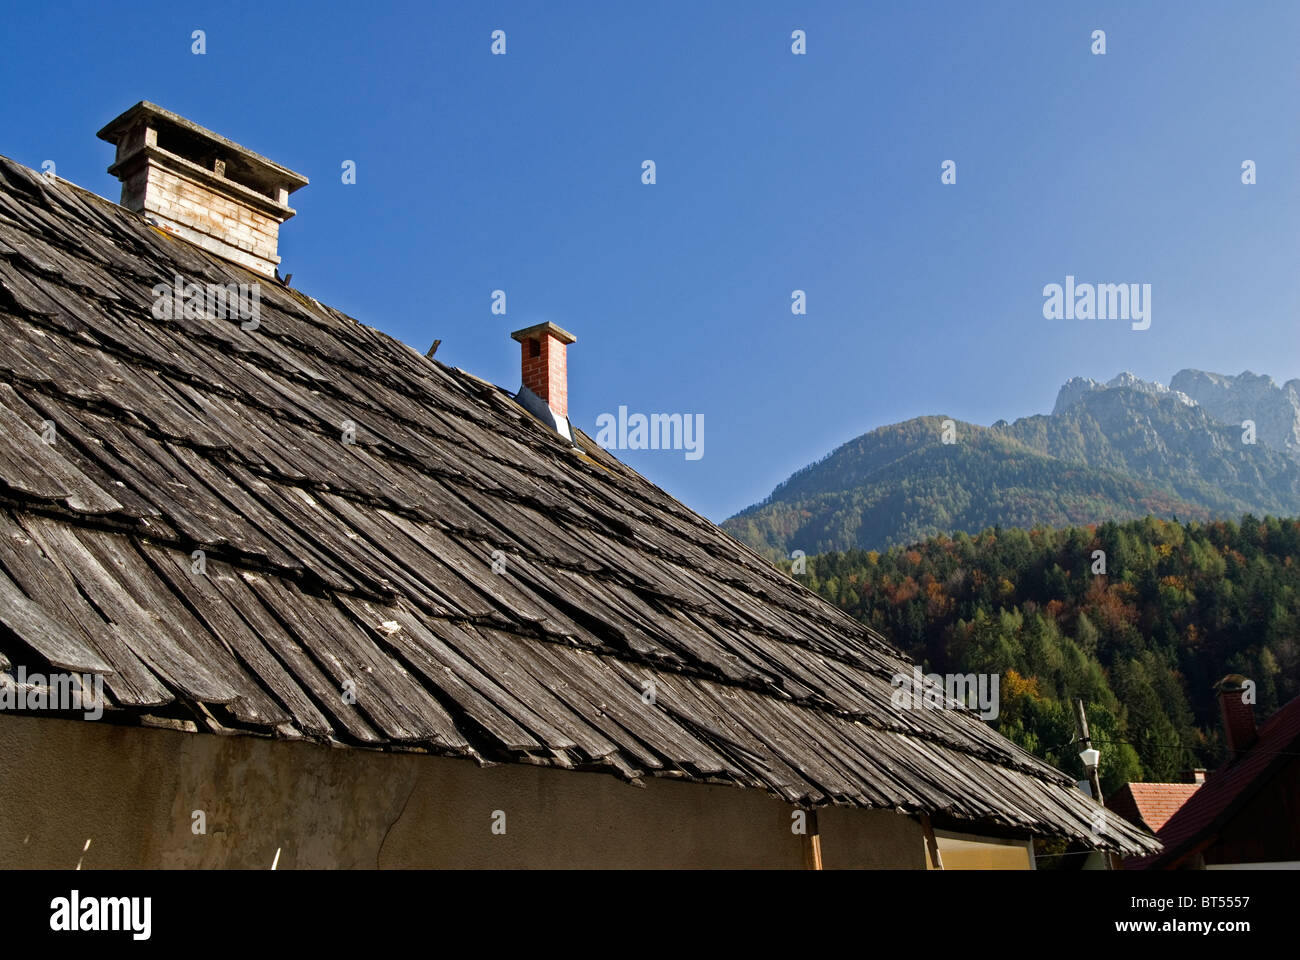 Wood Shingle roof Slovenia Stock Photo